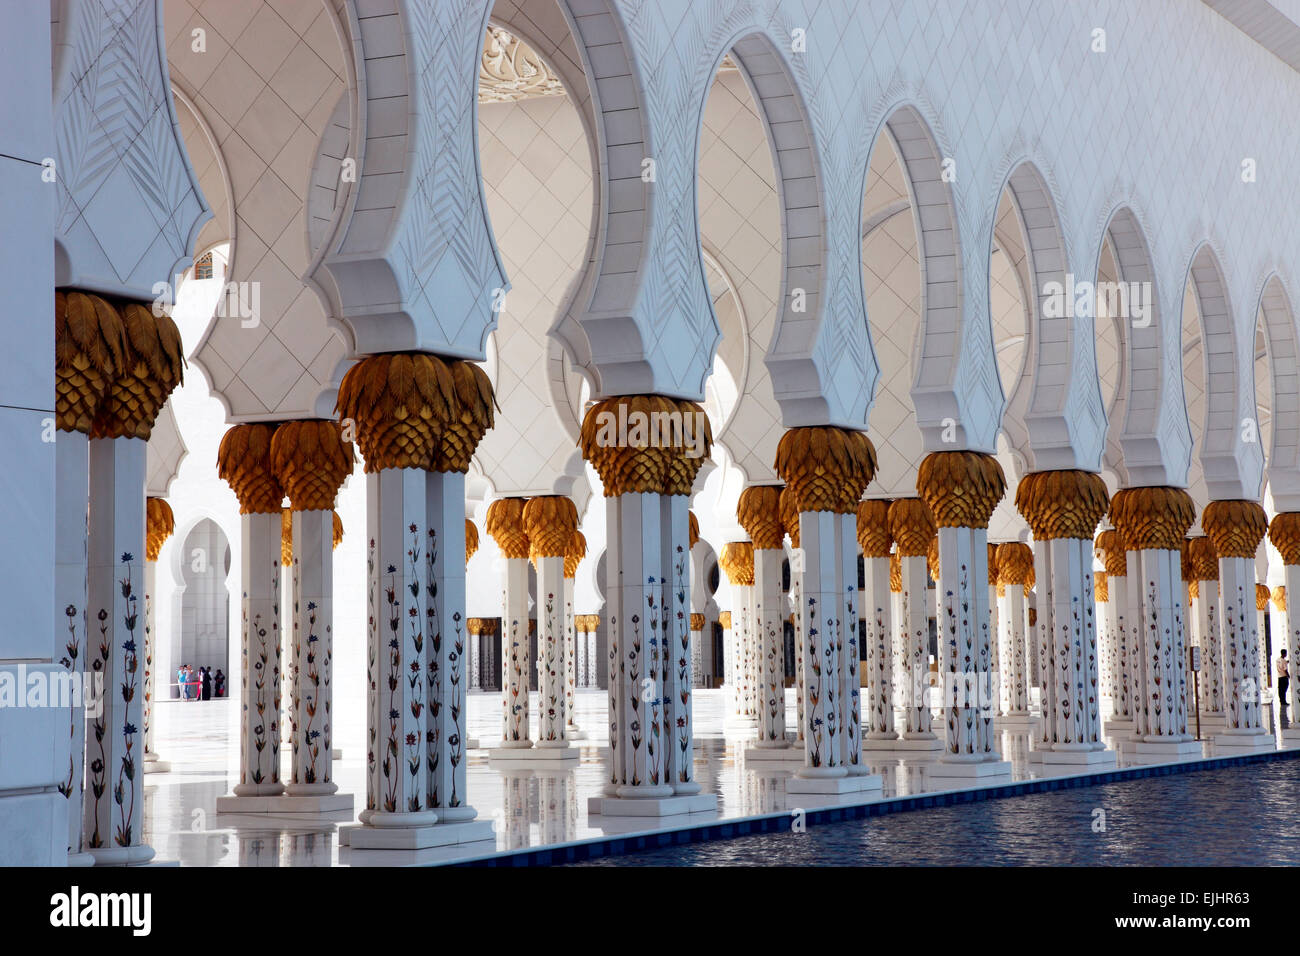 Pillars in the Grand Mosque in Abu Dhabi. Stock Photo